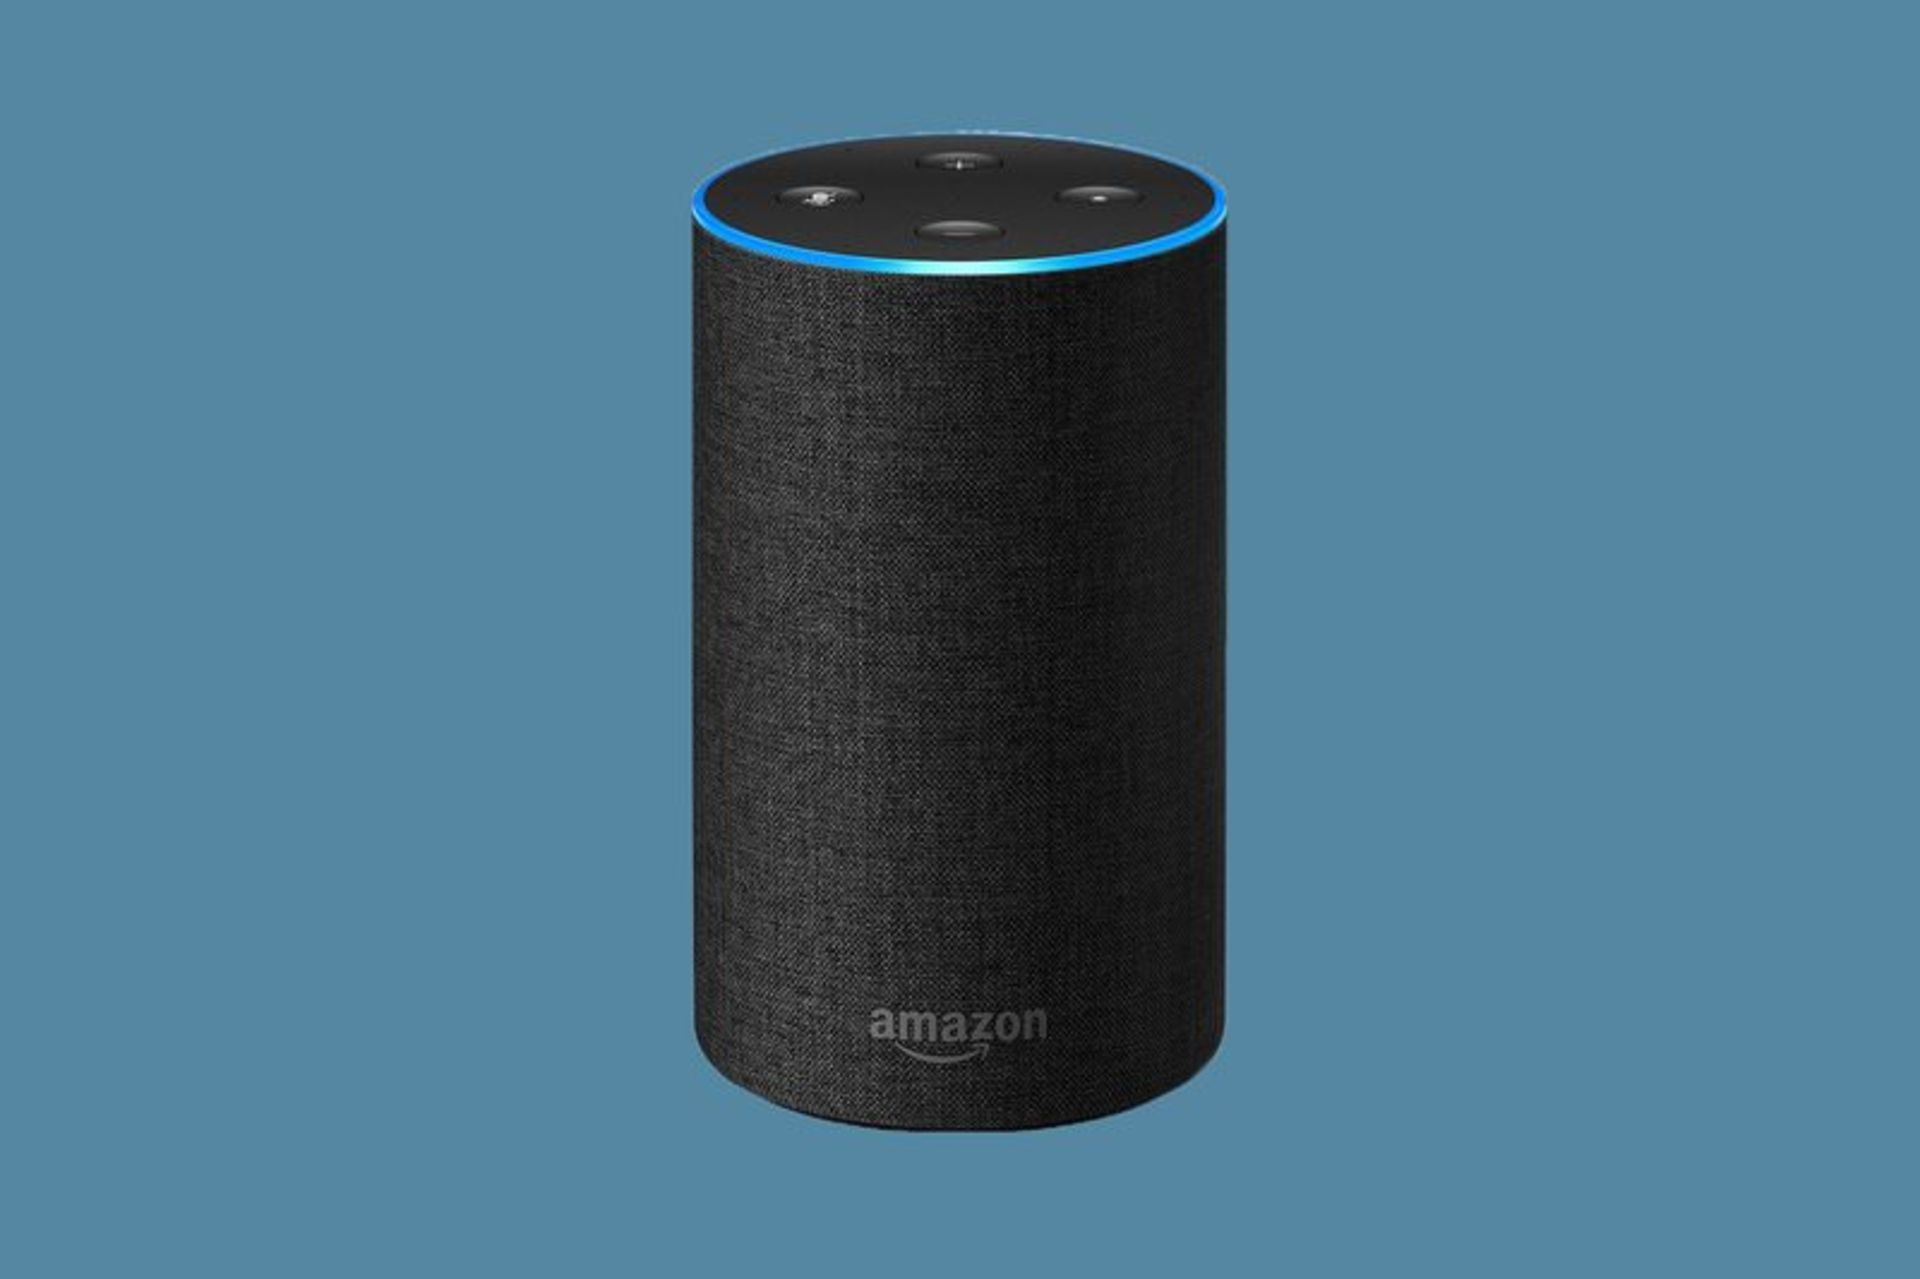 Amazon Echo (second generation)